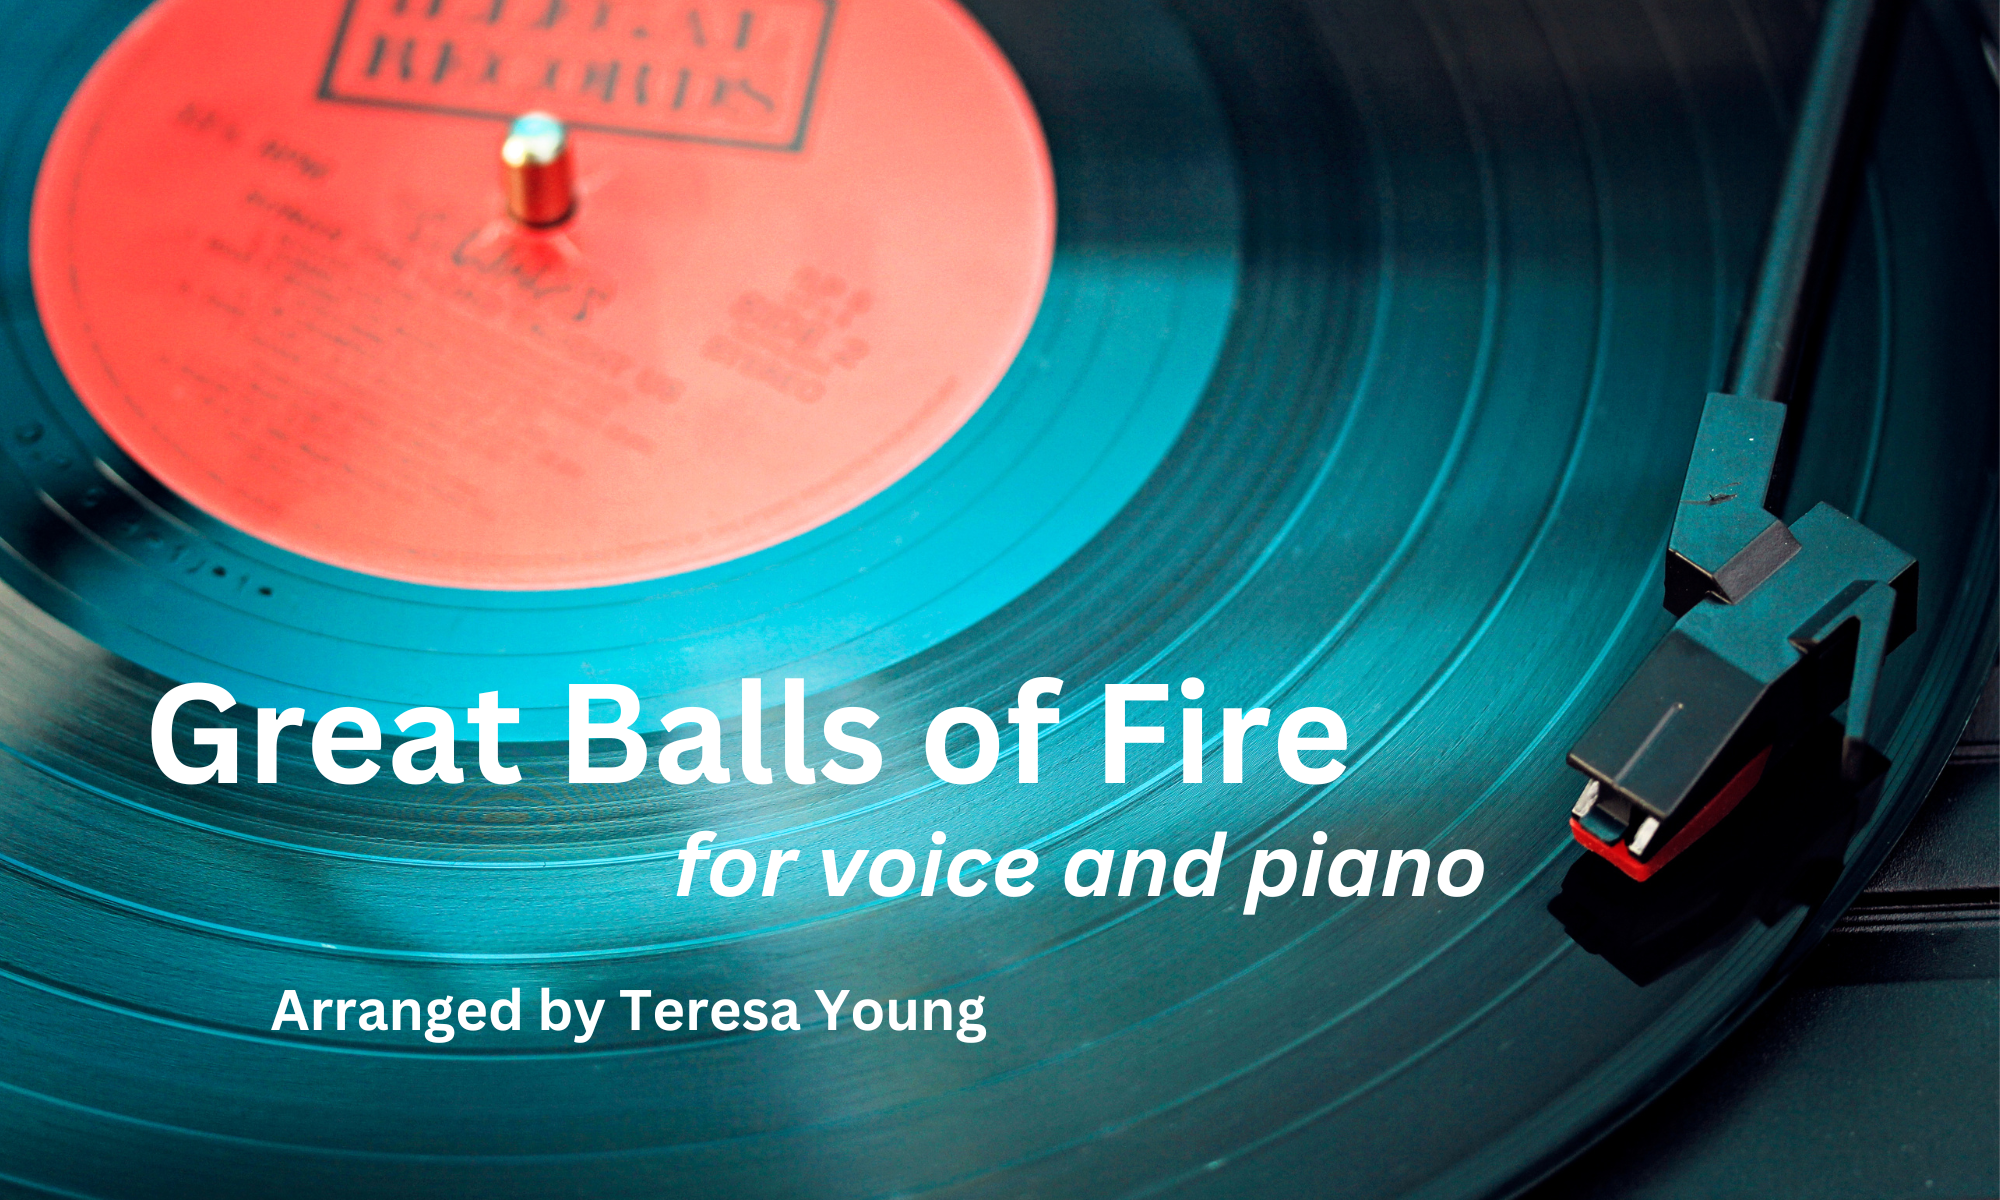 Great Balls of Fire, arr. Teresa Young